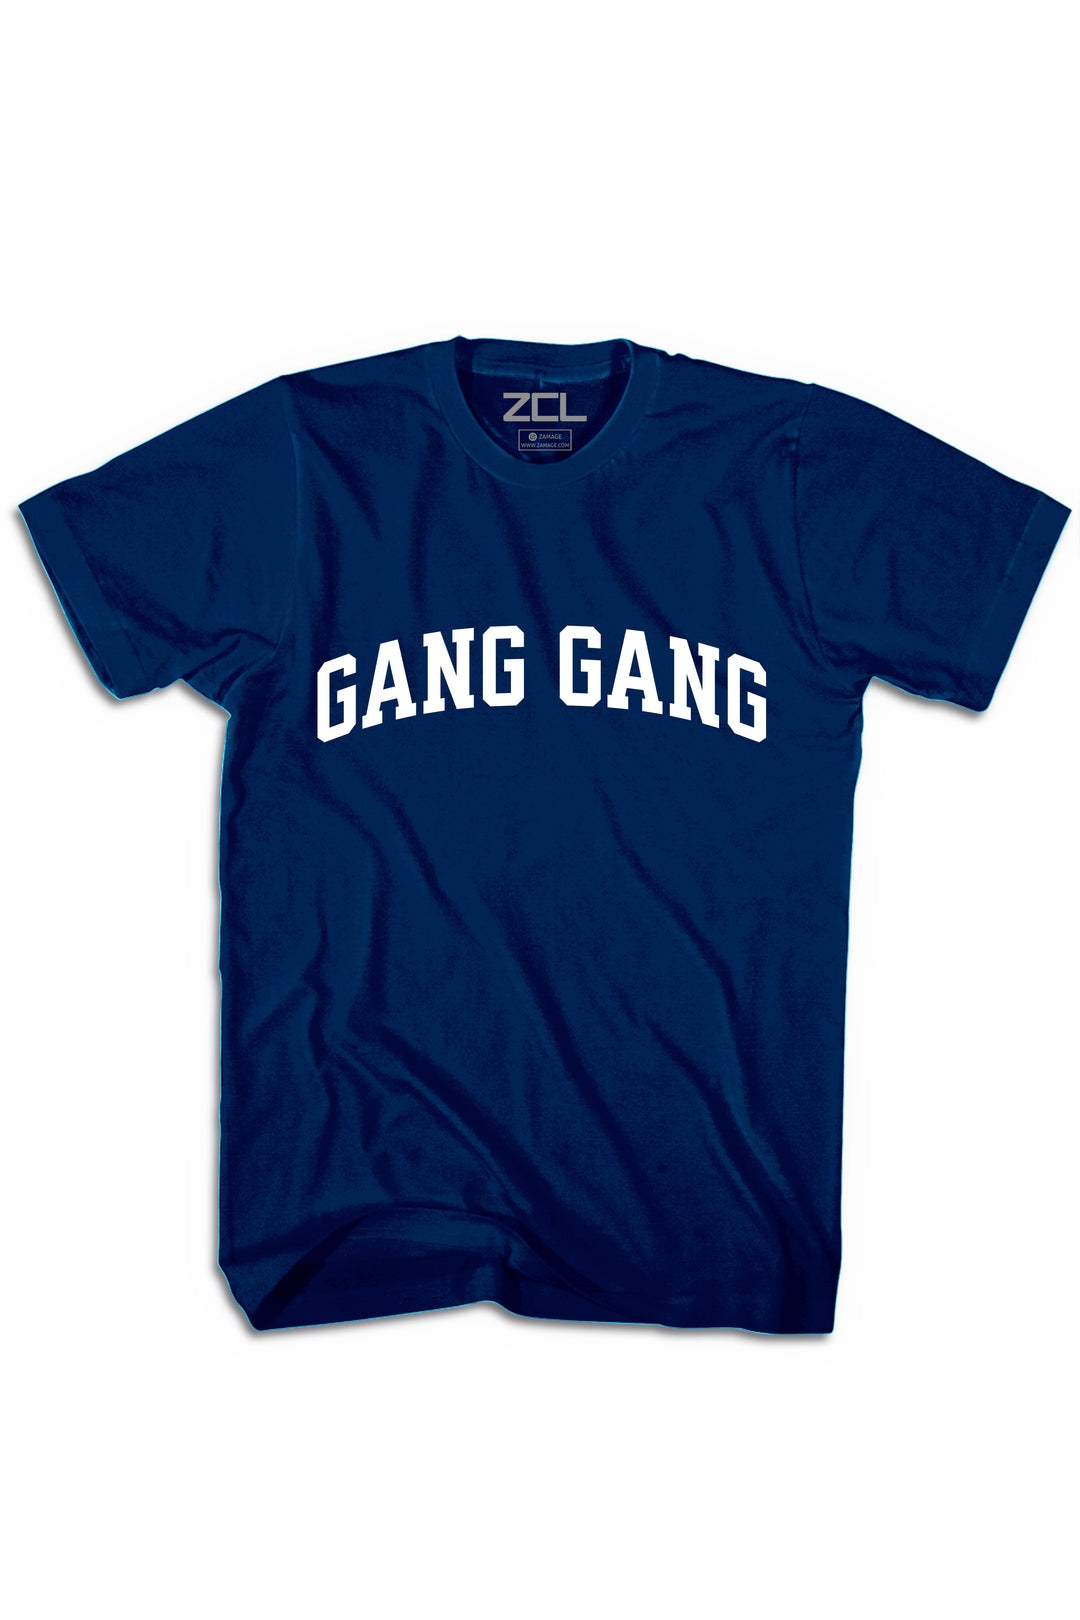 Gang Gang Tee (White Logo) – Zamage